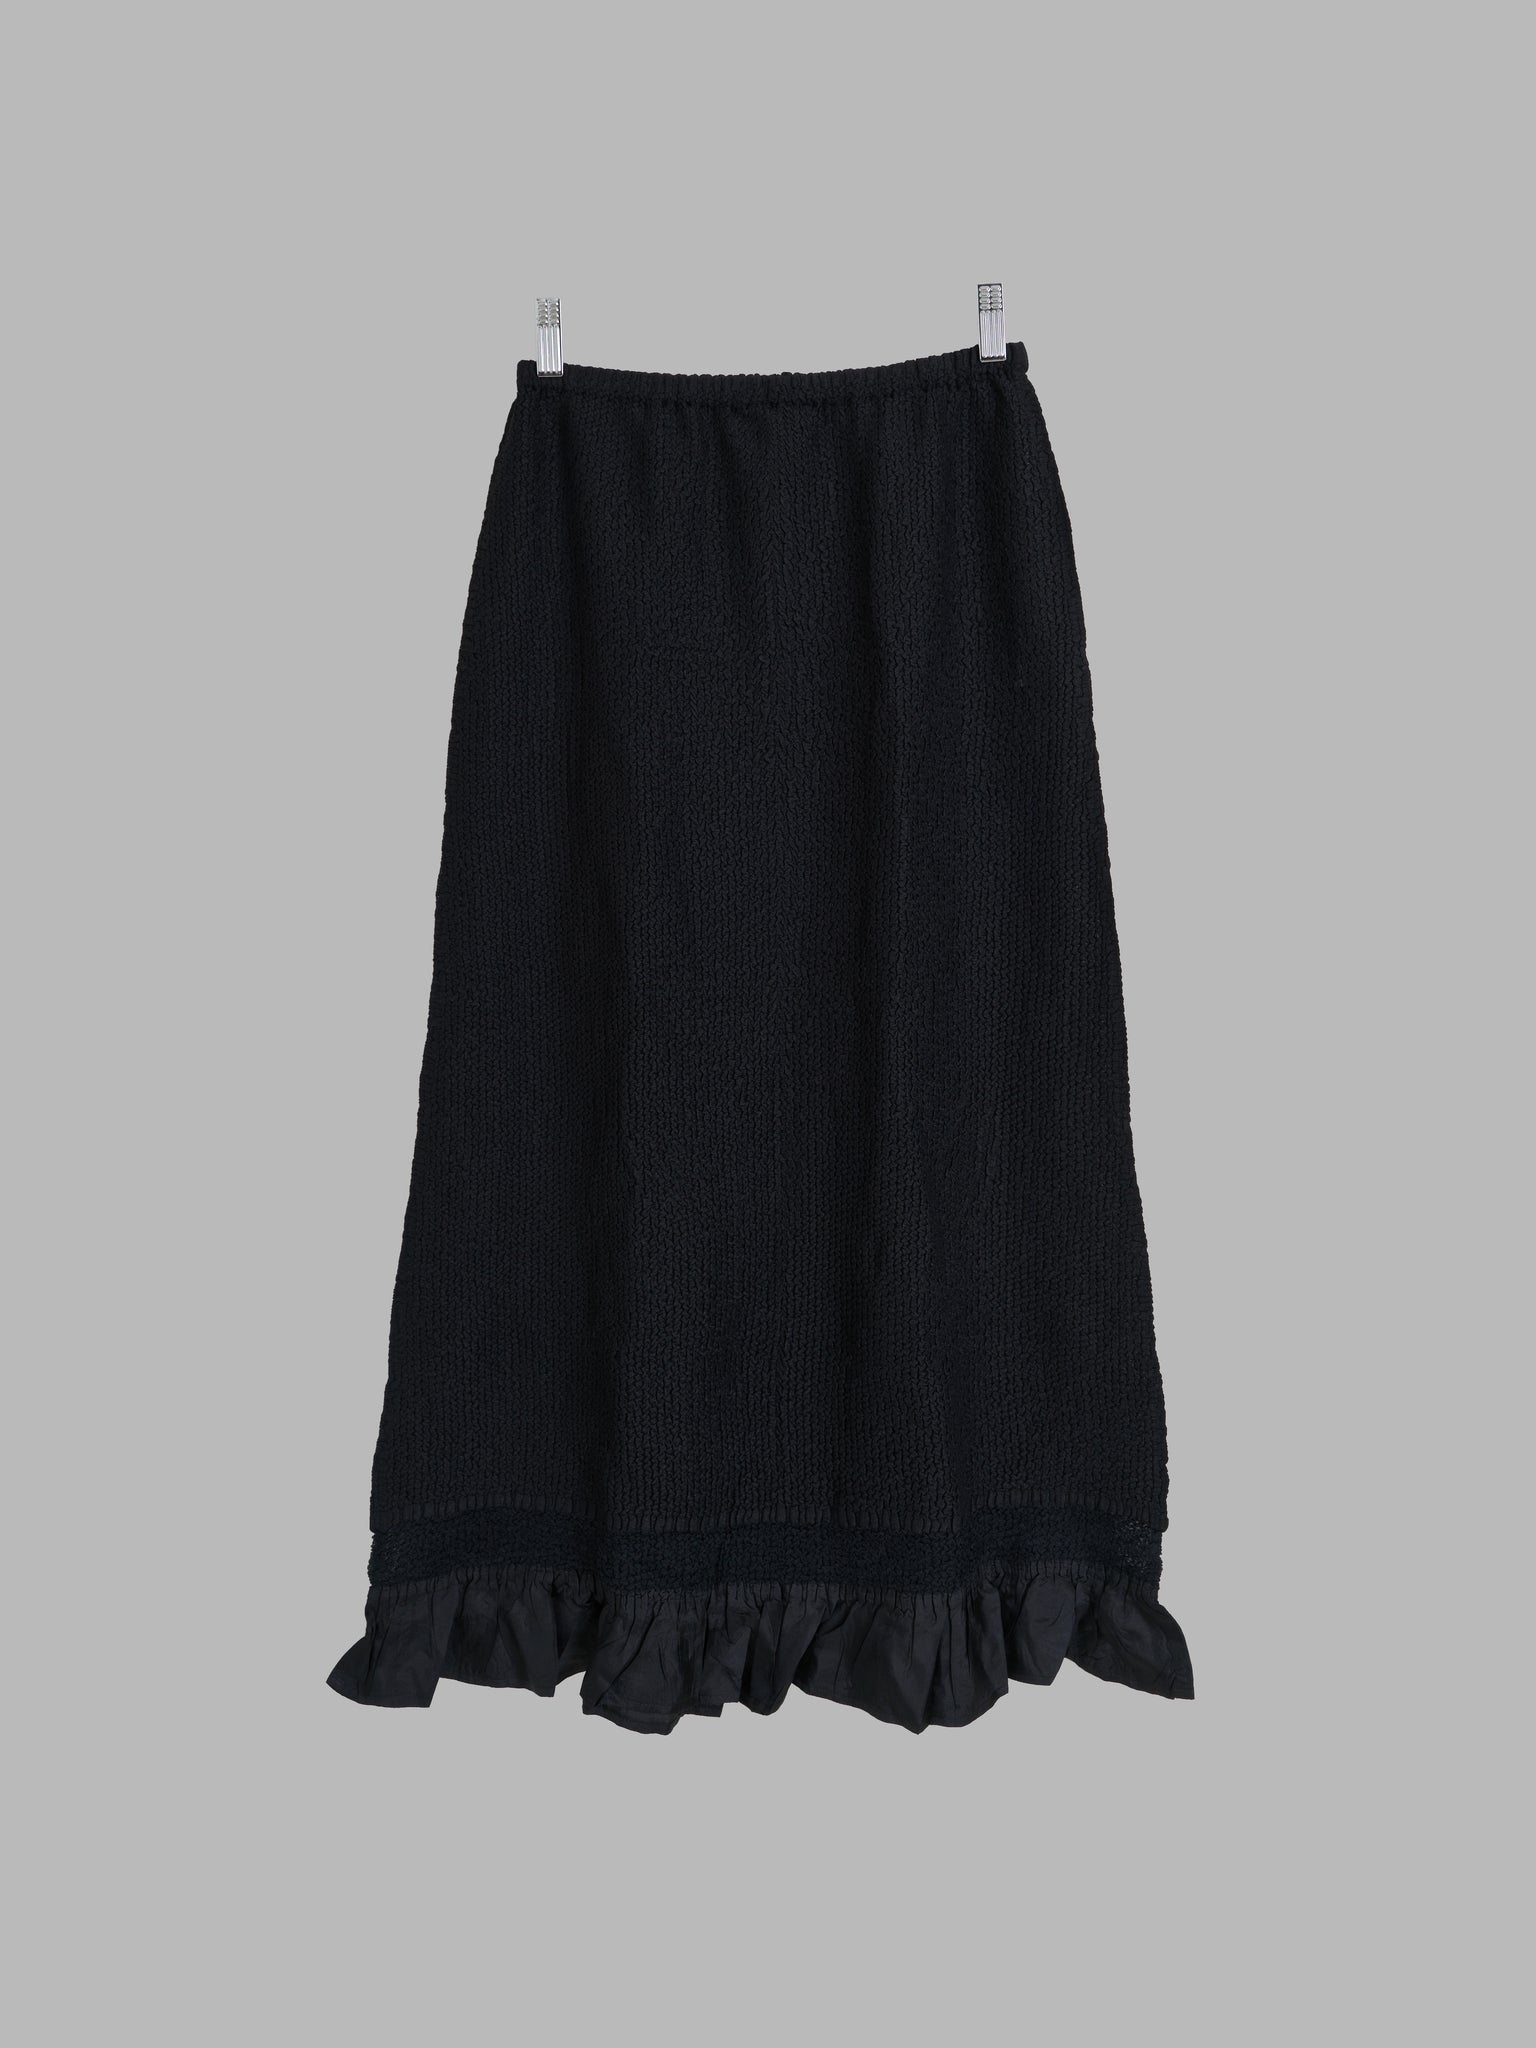 Yoshiki Hishinuma Peplum black pleated polyester ruffle hem skirt - size 2 S M